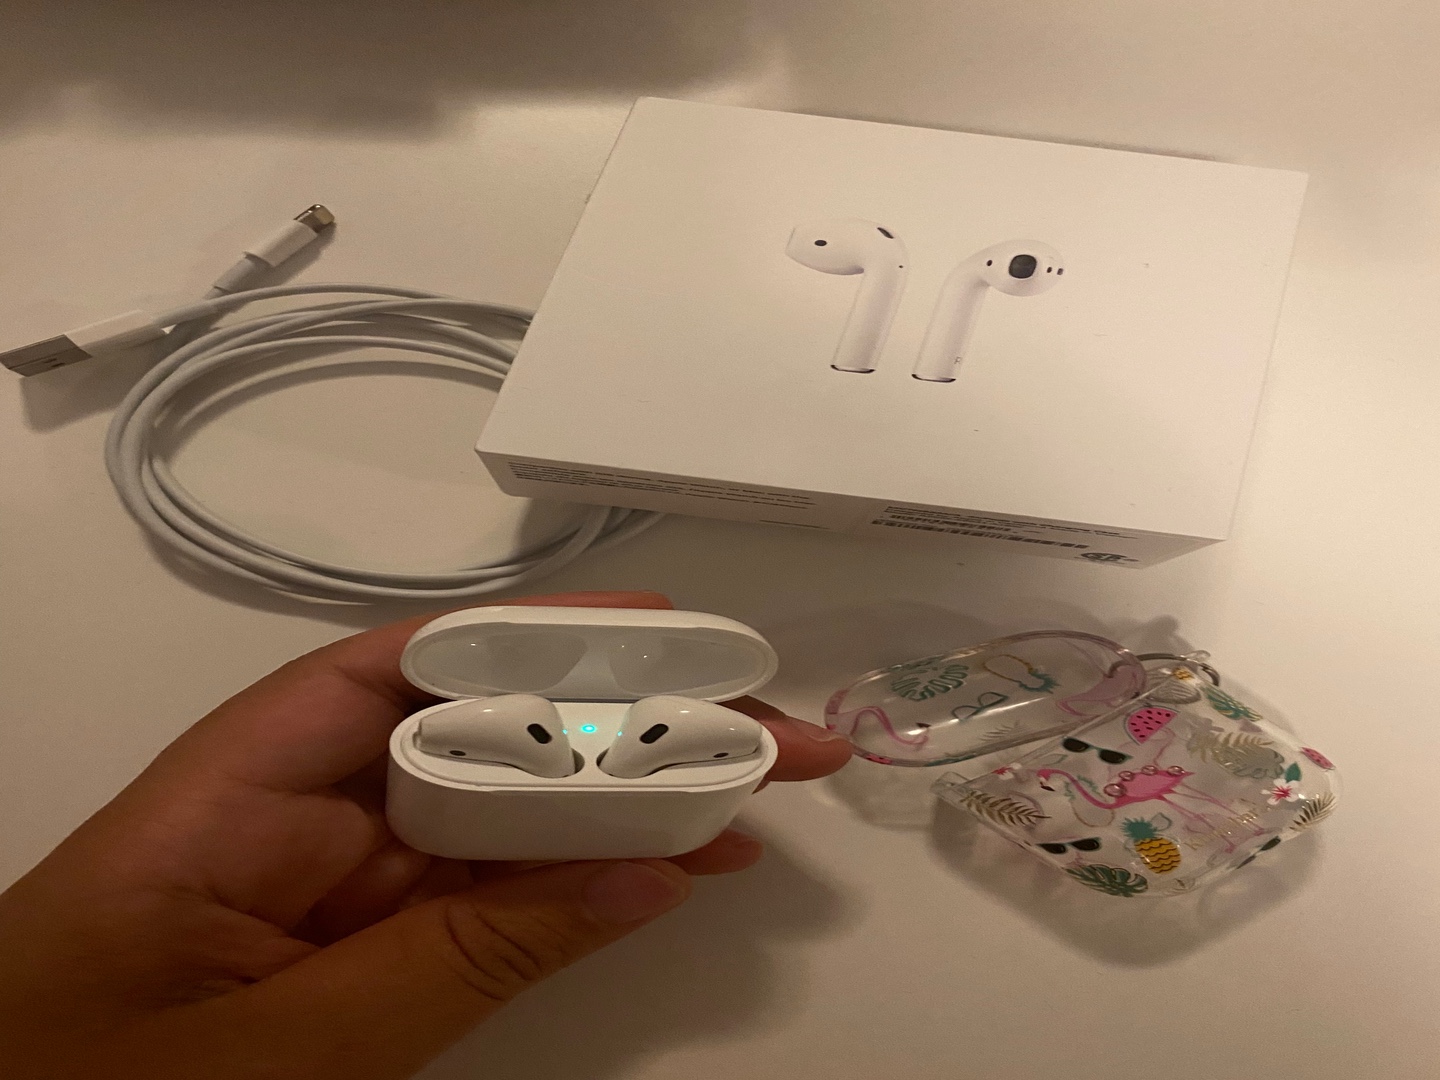 accesorios para electronica - Apple Airpods 2nd generacion Original